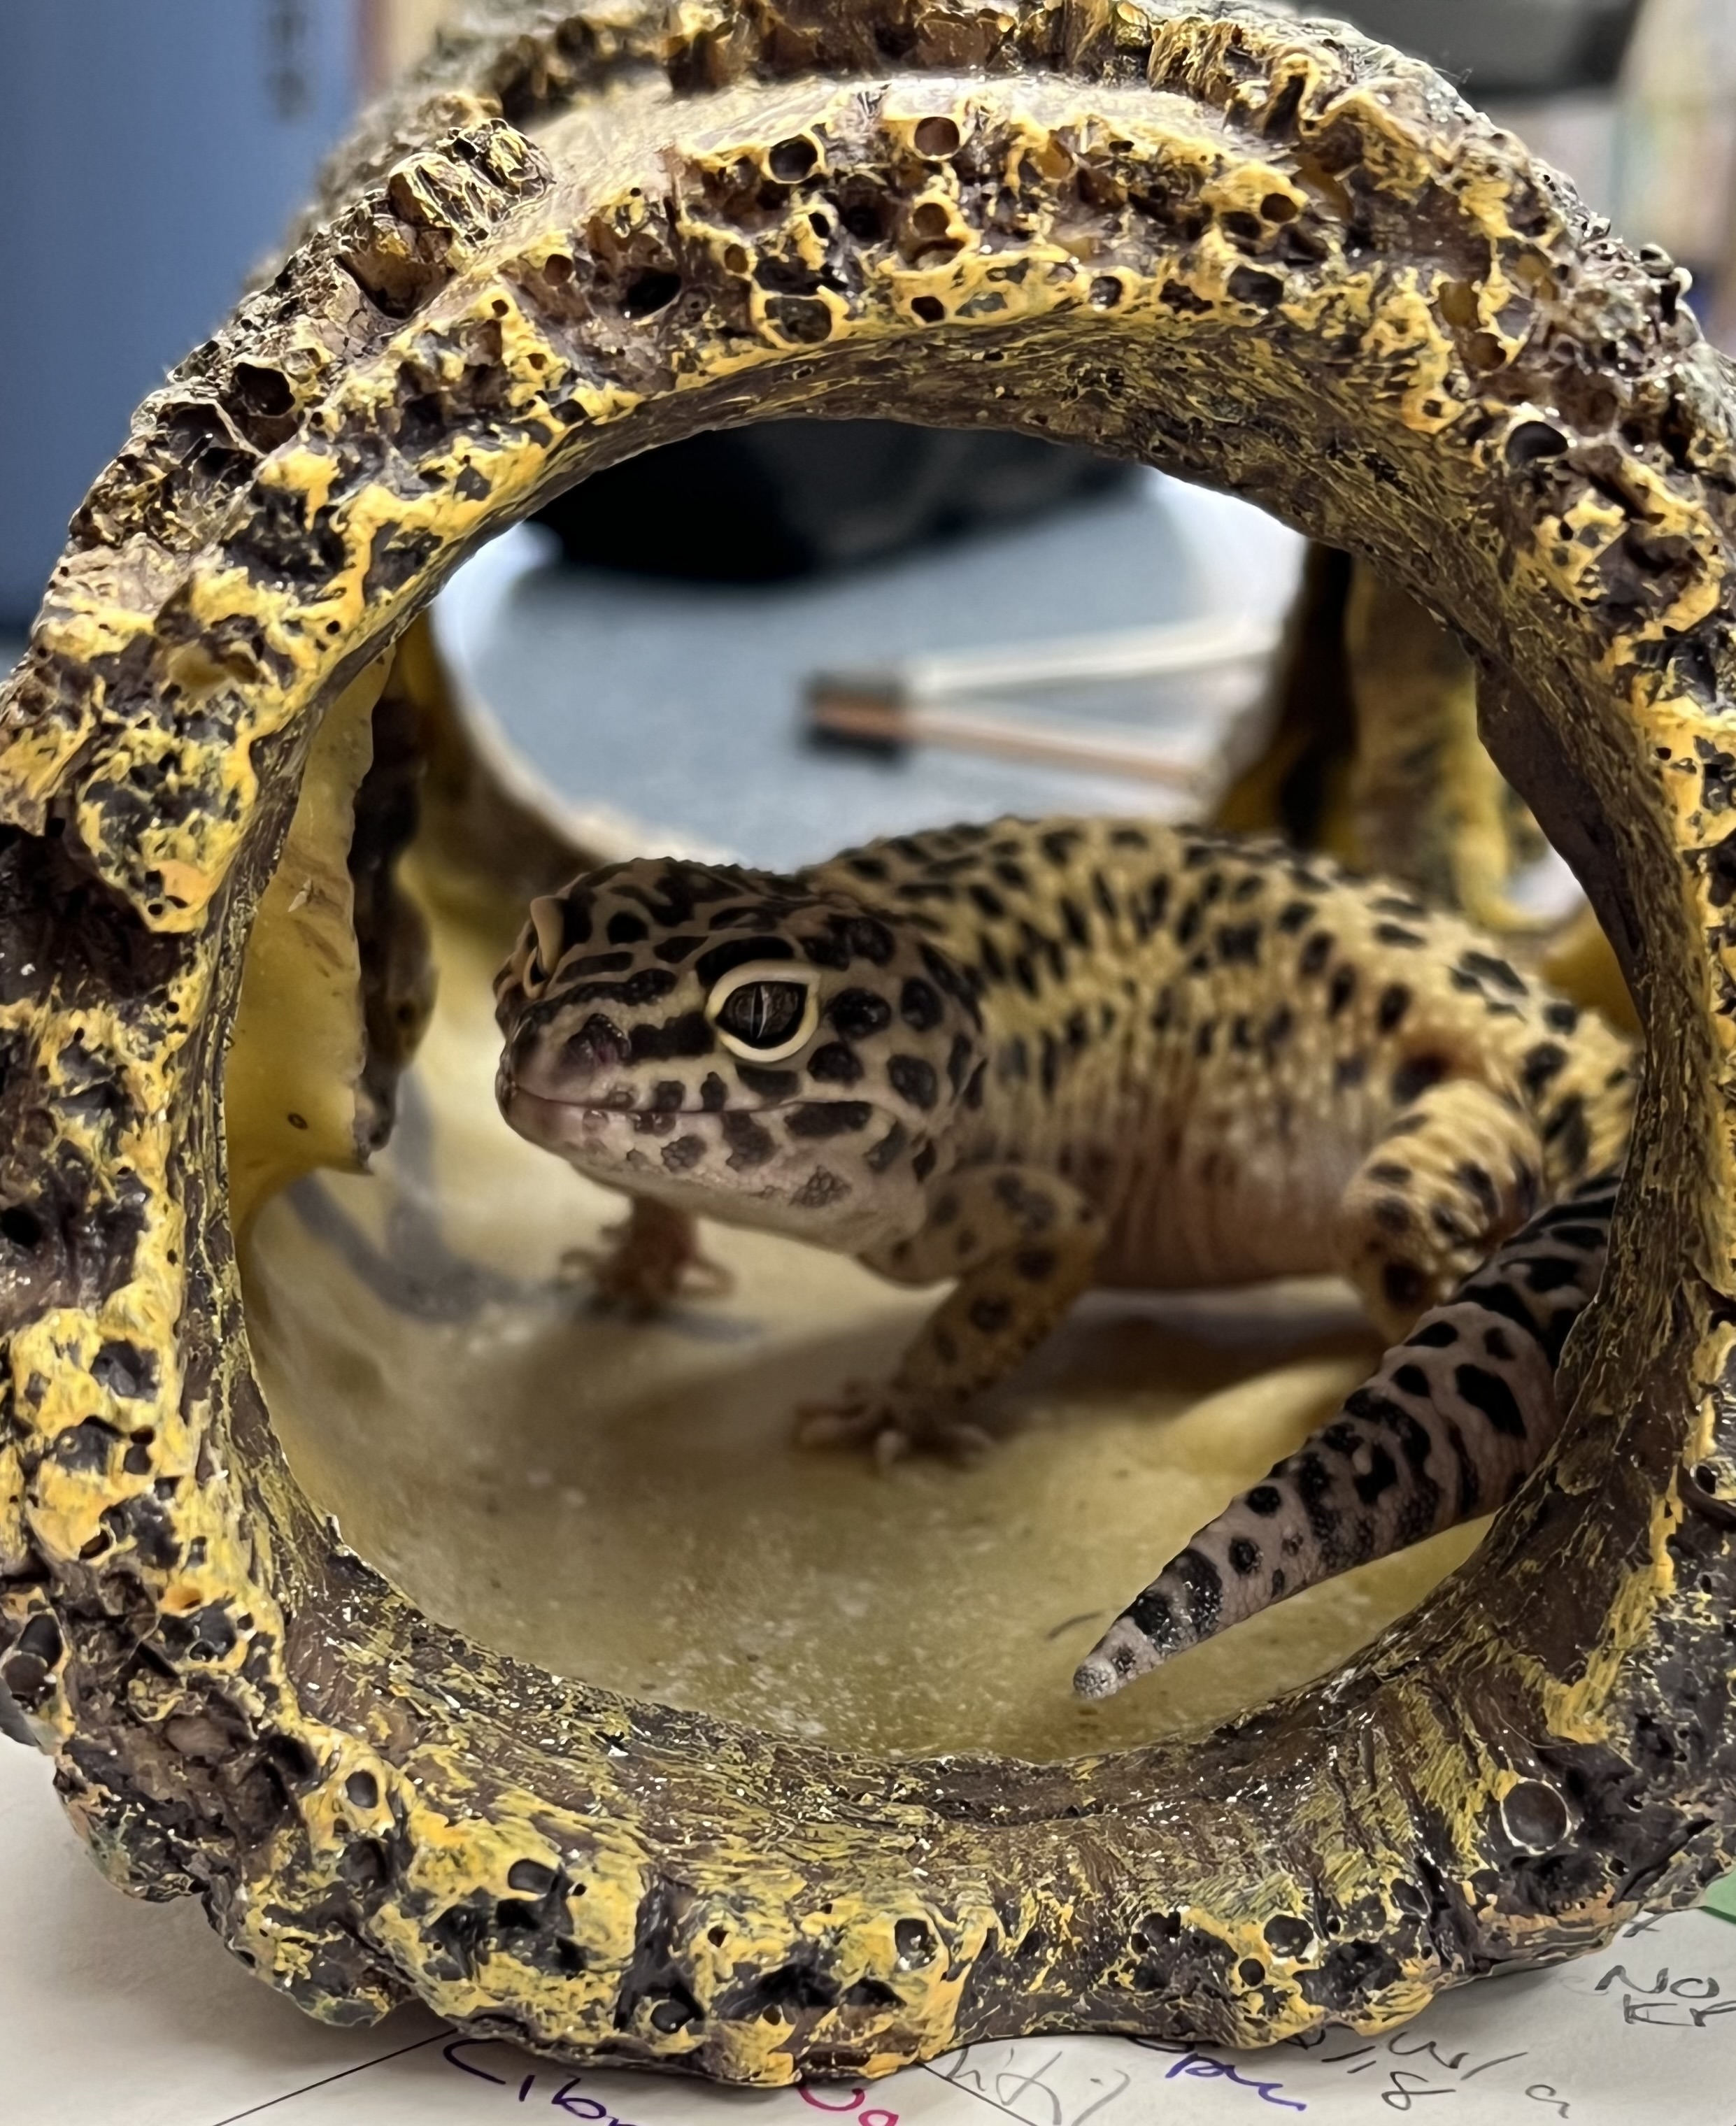 Gus the Leopard Gecko